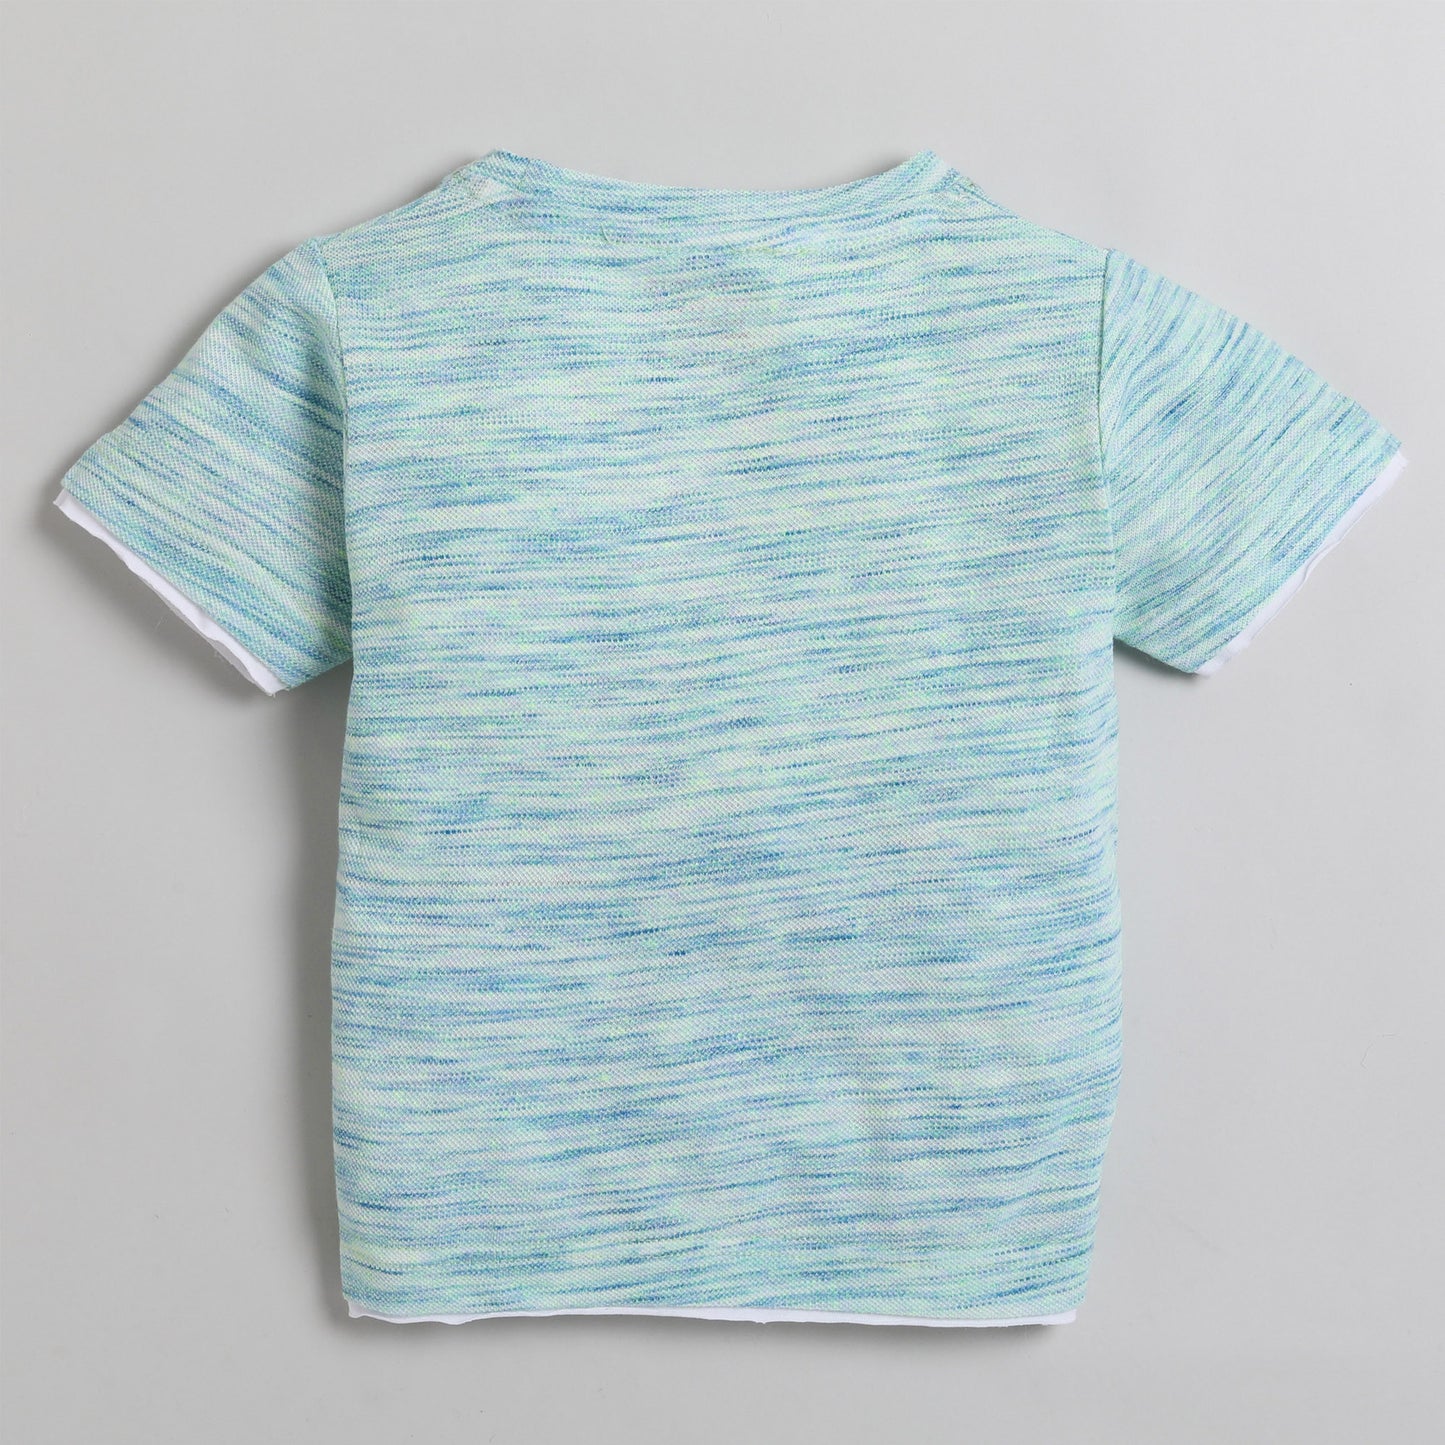 Polka Tots Half Sleeve T-Shirt 100% Cotton Self Weave - Blue